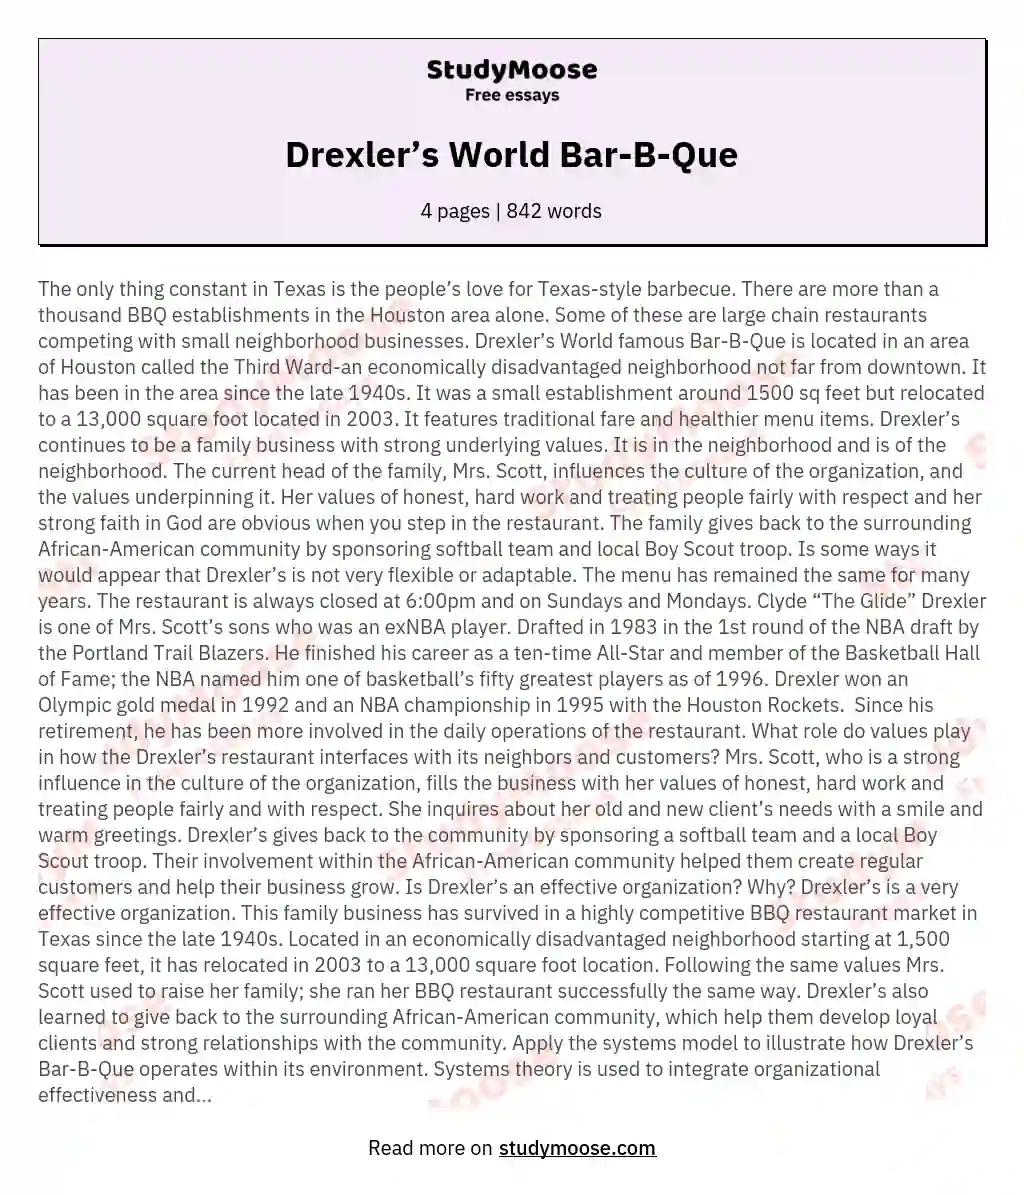 Drexler’s World Bar-B-Que essay